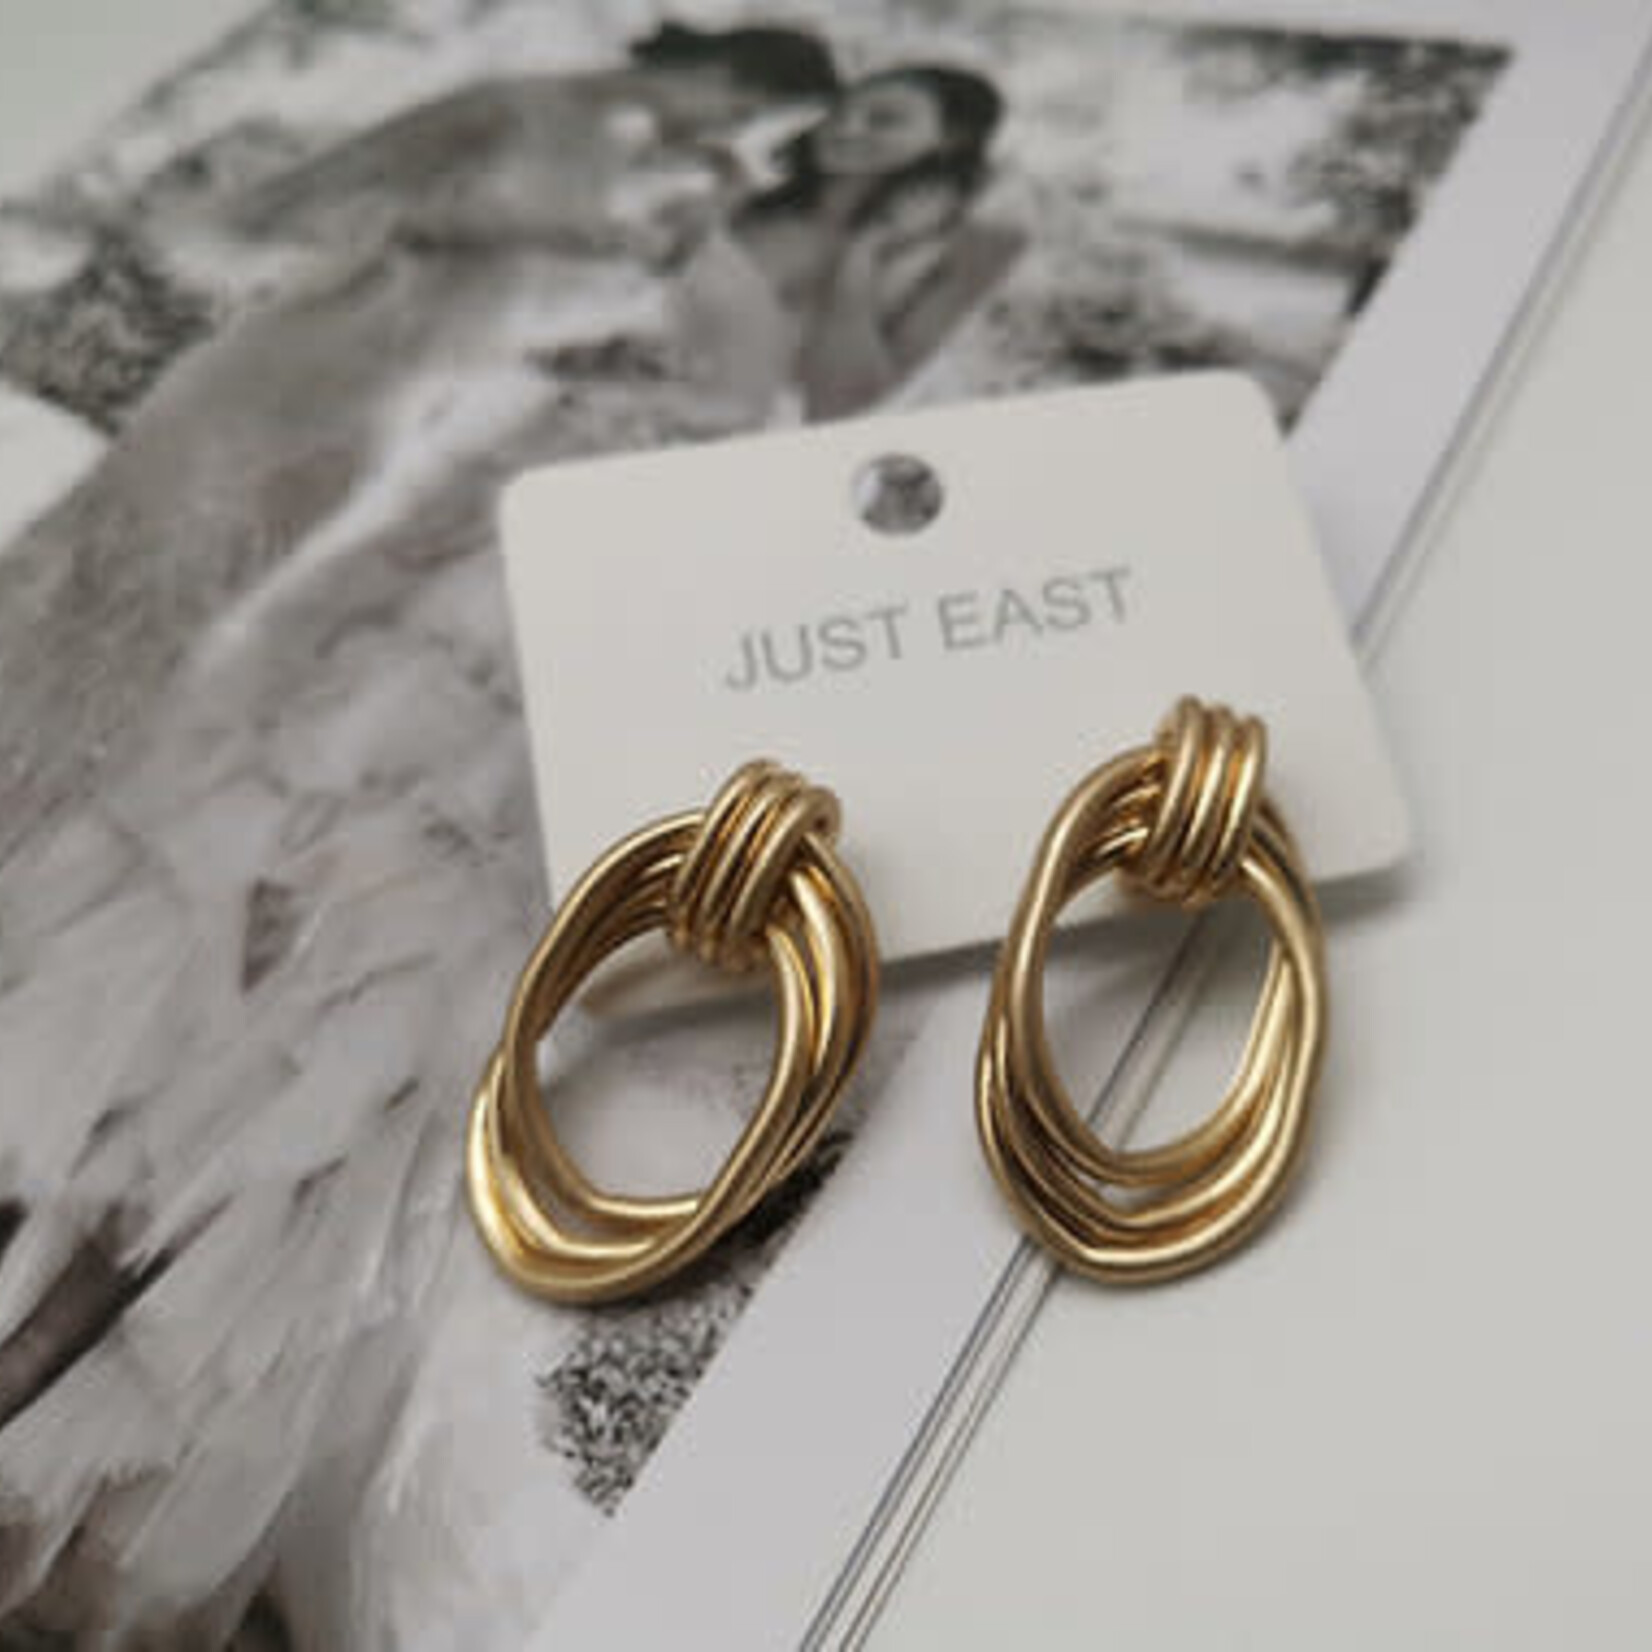 Just East Gold Ring L4.5cm W2.5cm Oval Earrings